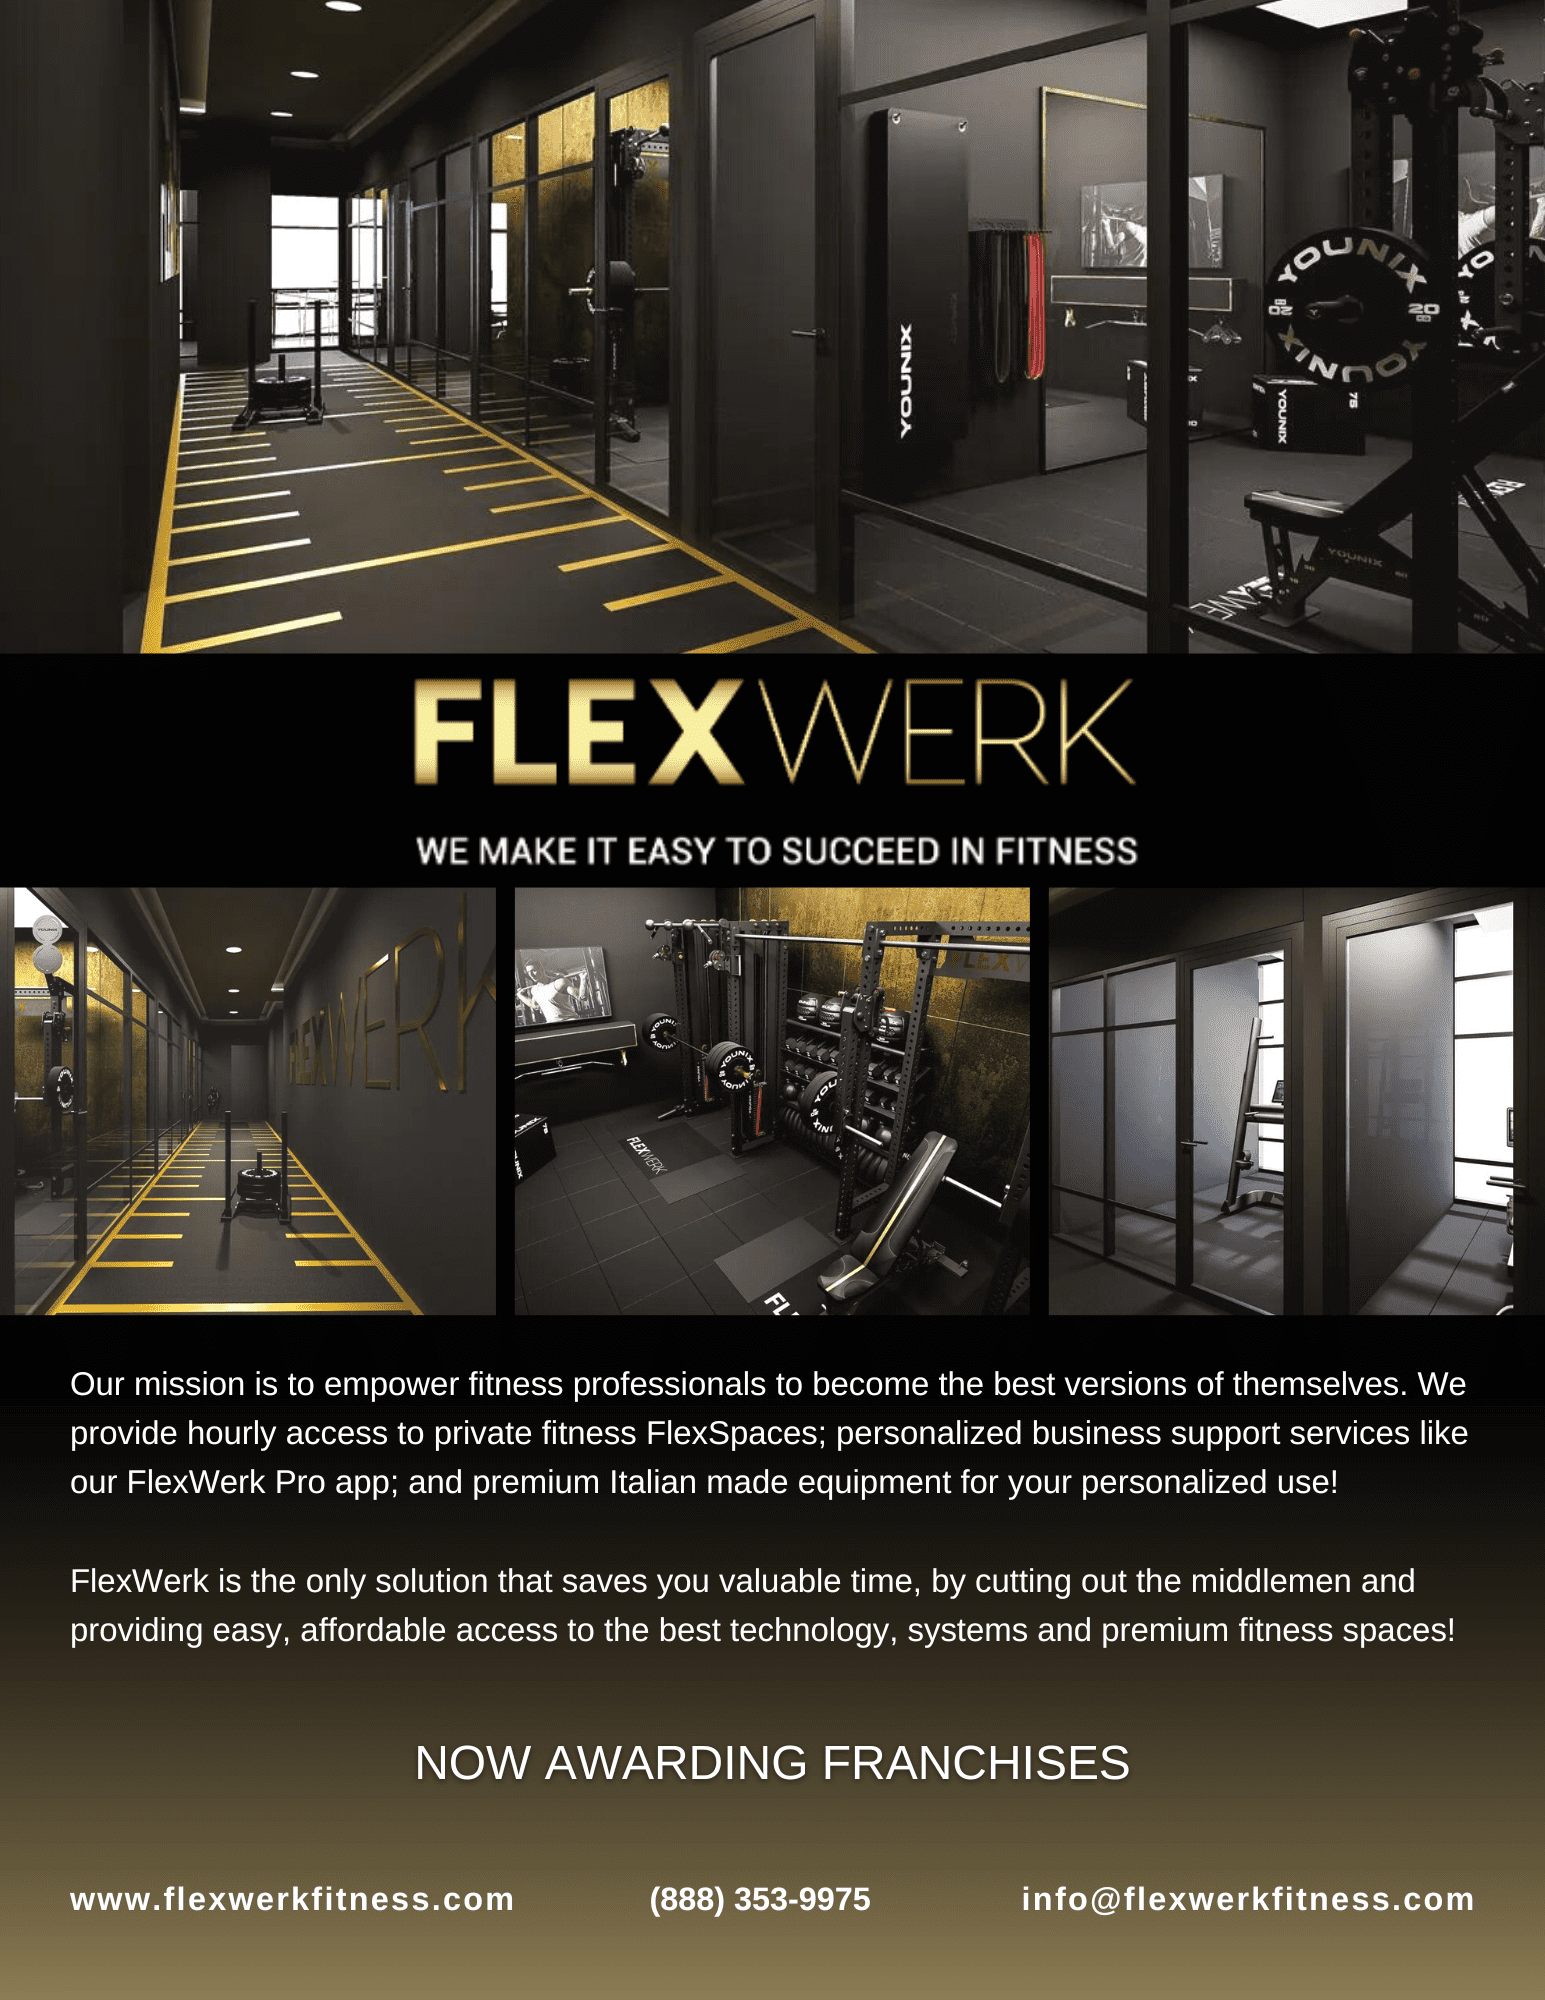 Flexwerk: The Best New Innovation in Fitness